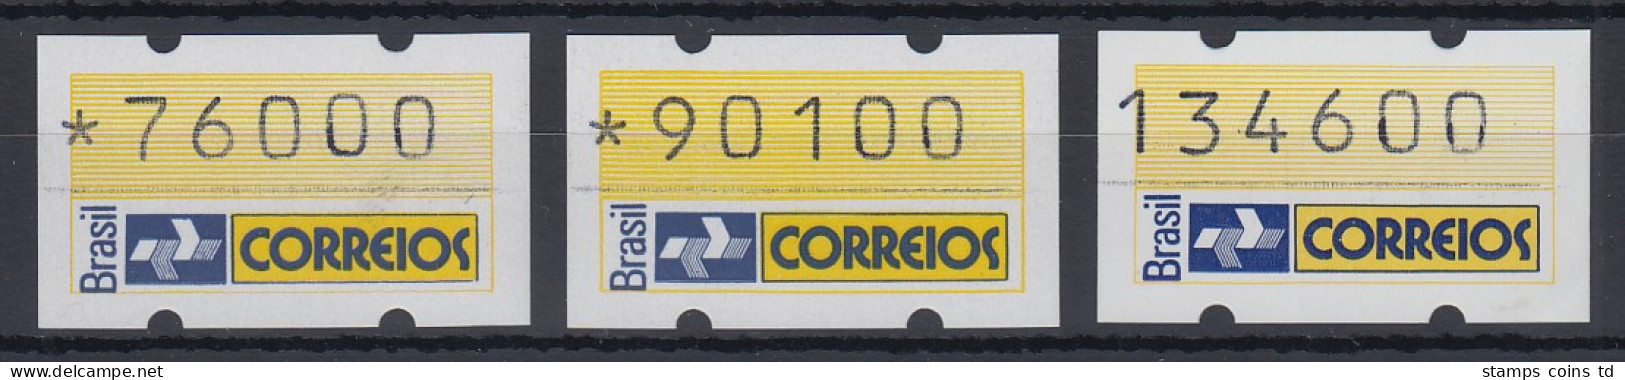 Brasilien Klüssendorf-ATM 1993 Postemblem Mi-Nr 4 Satz 76000 - 90100 - 134600 ** - Frankeervignetten (Frama)